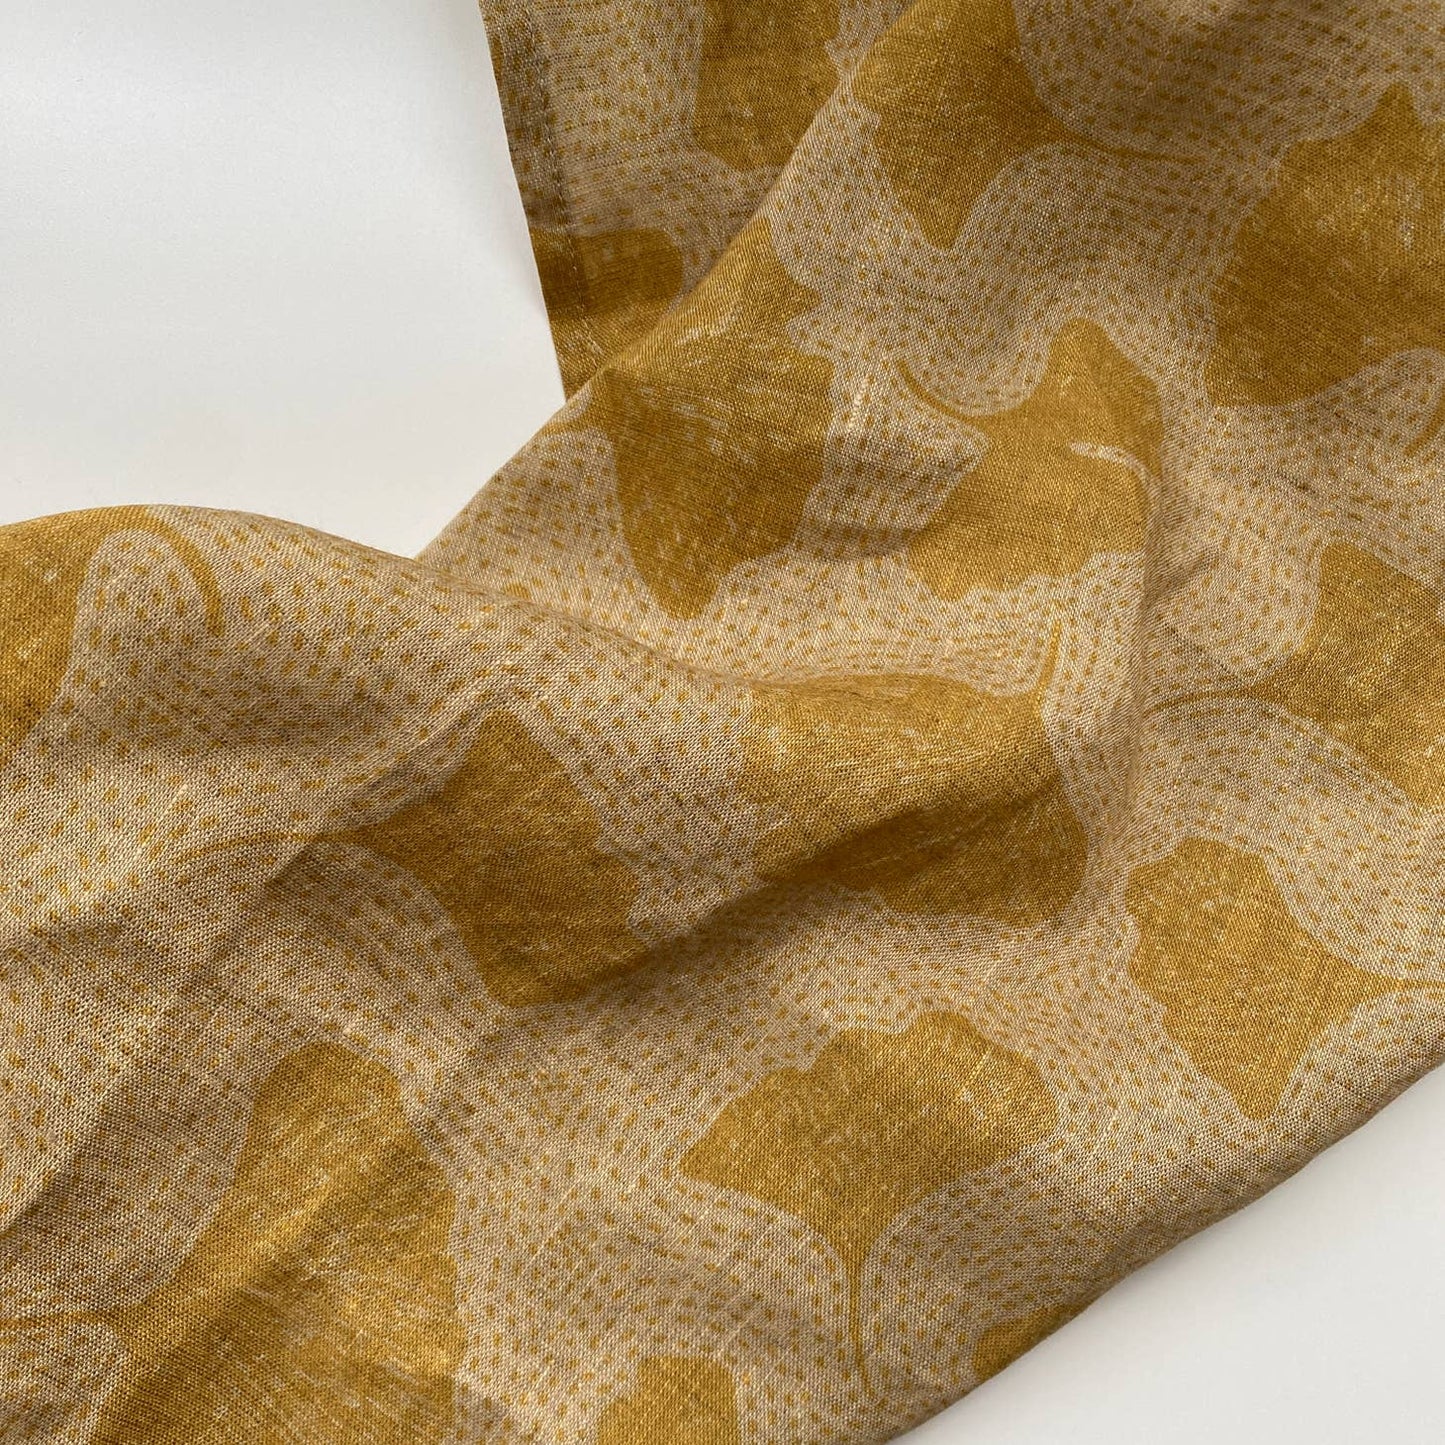 Mustard Gingko Linen Tea Towel - Emily Ruth Prints